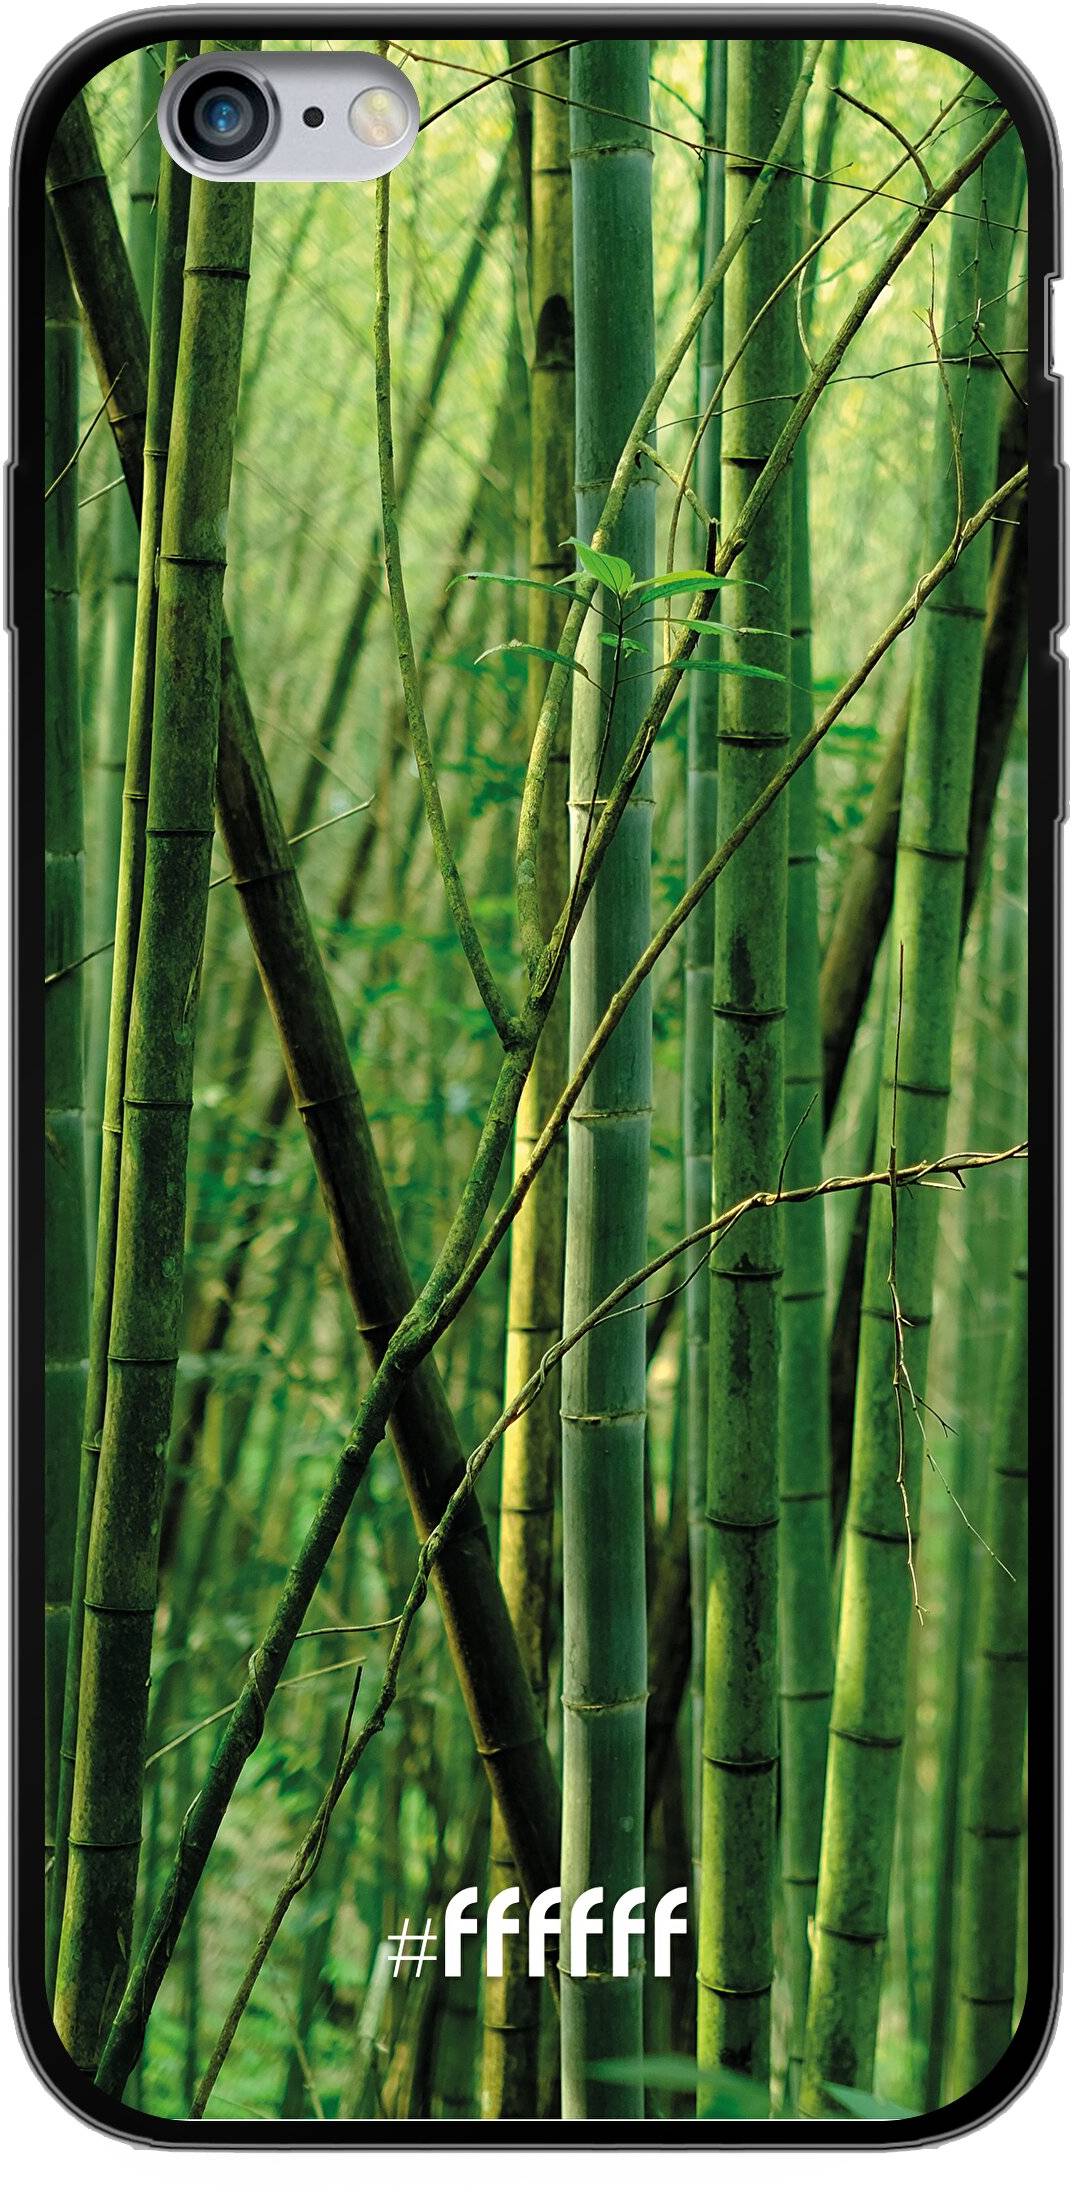 Bamboo iPhone 6